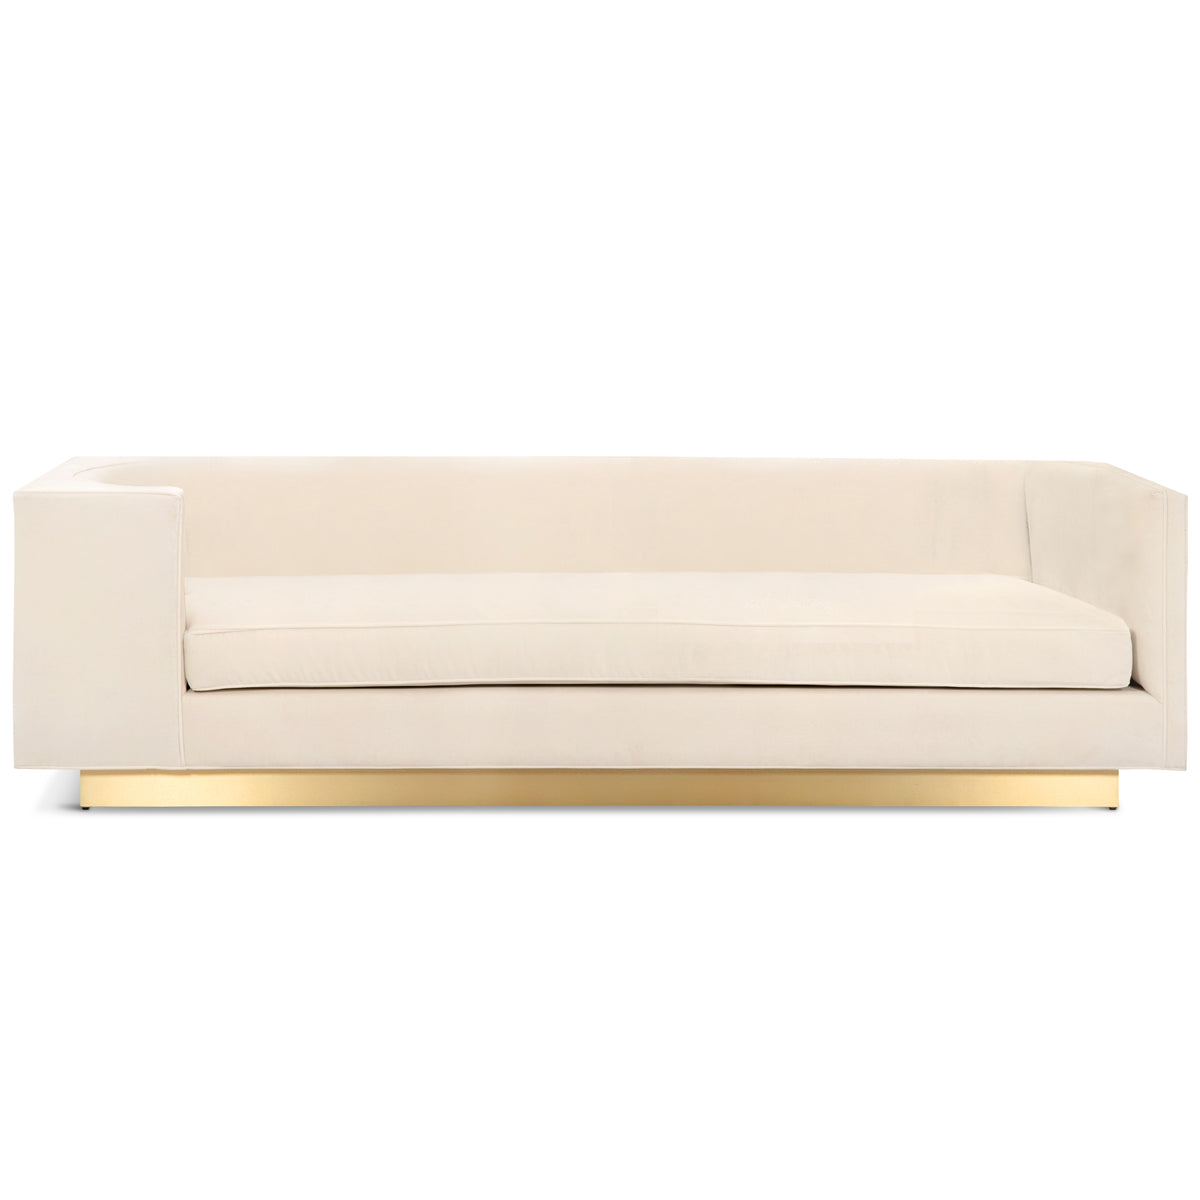 Goldfinger Sofa with Brushed Brass Toe Kick - ModShop1.com